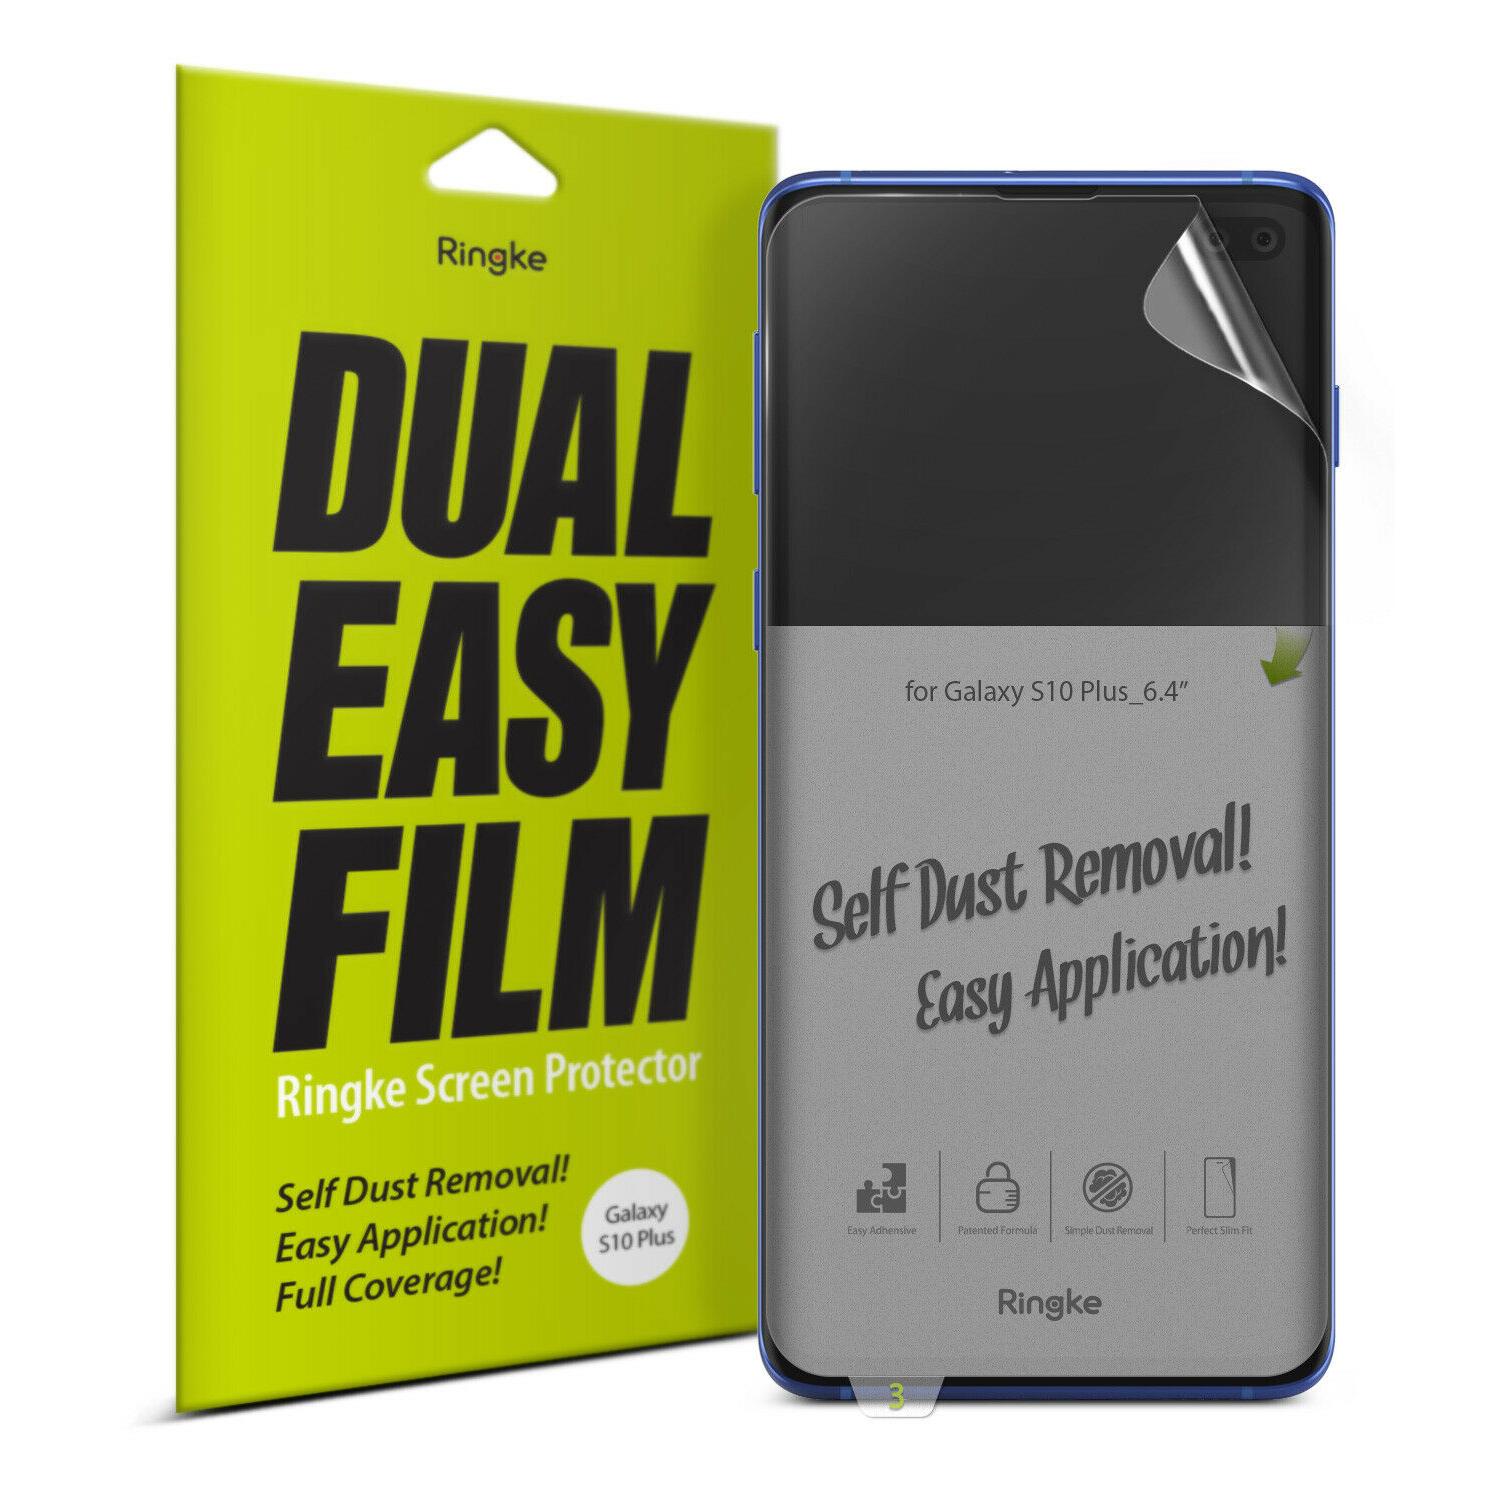 Dual Easy Screen Protector Galaxy S10 Plus